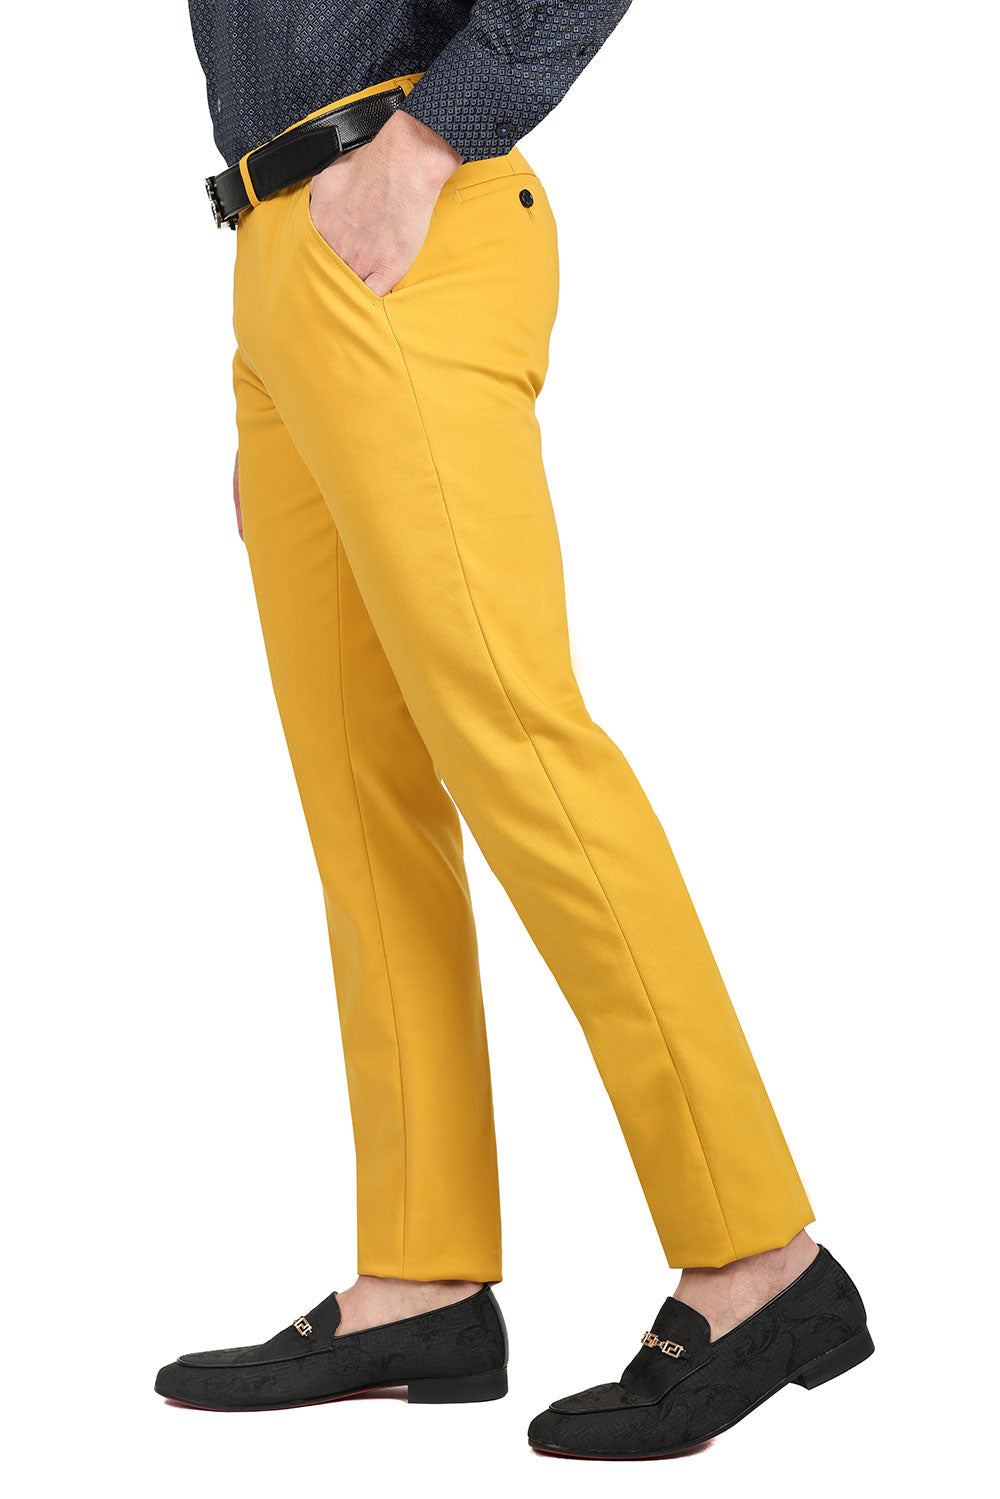 Barabas Men's Premium Plain Solid Color Chino Dress Pants 2CP3080 Mustard